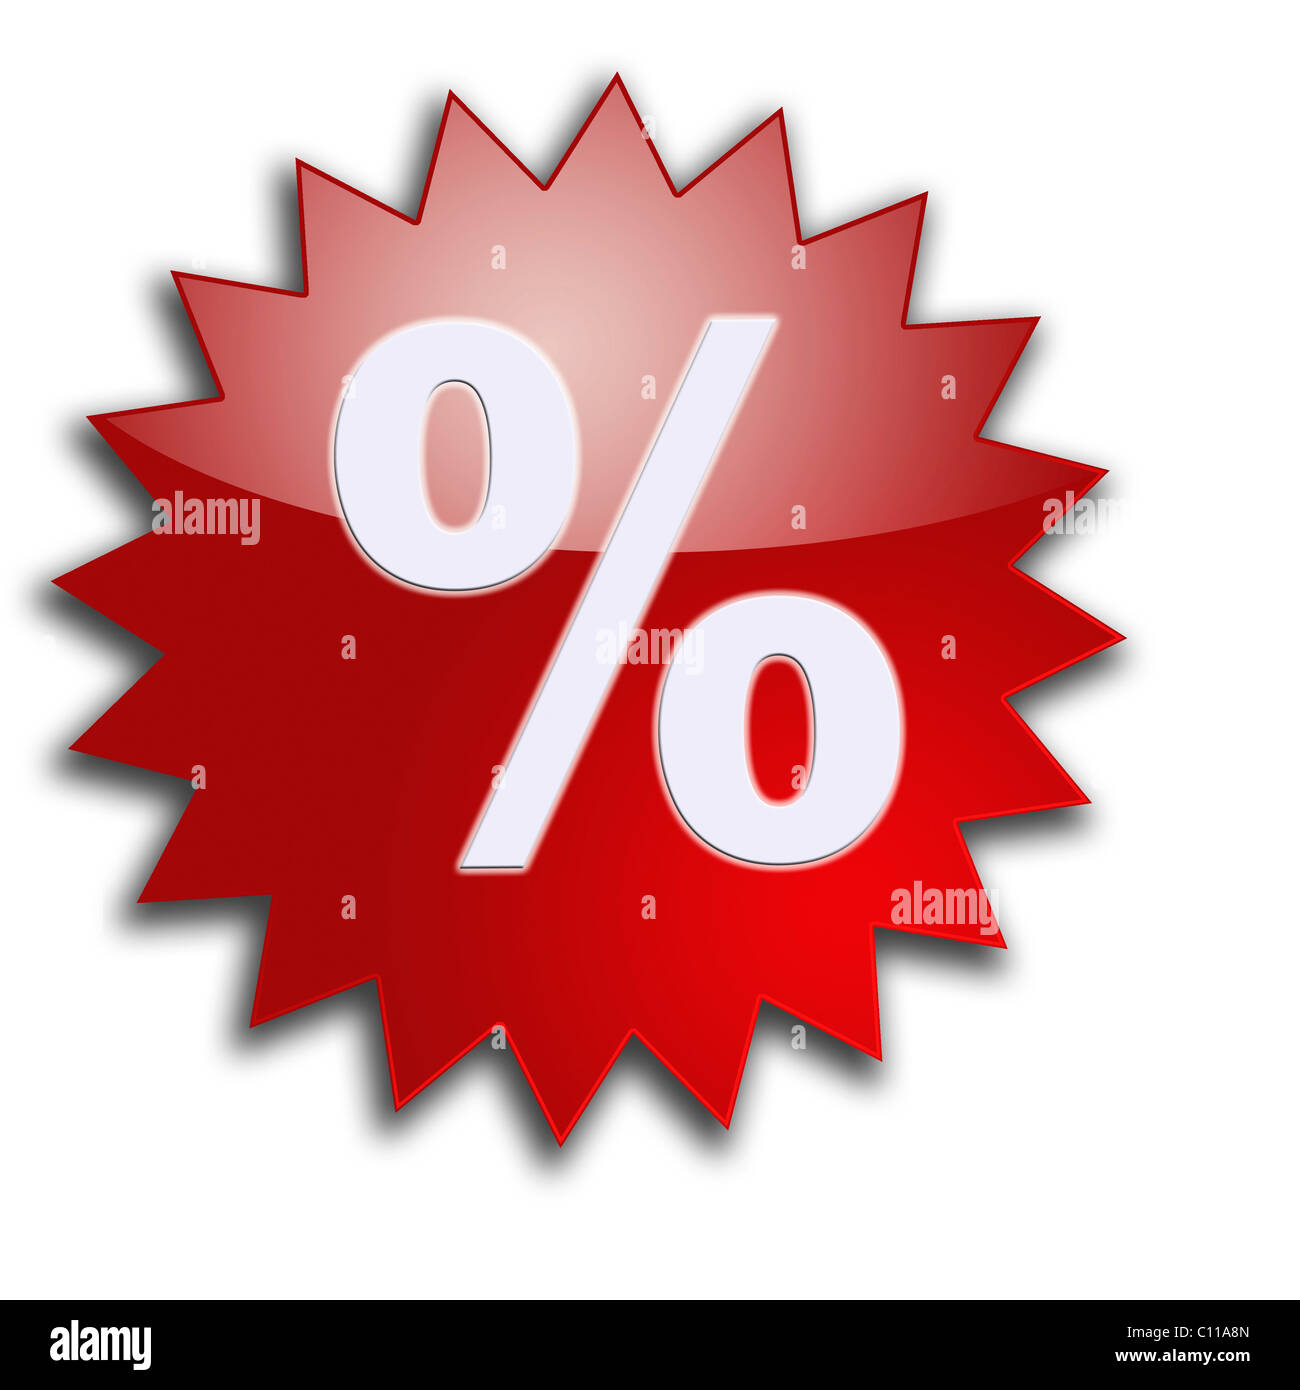 Discount, percents Stock Photo